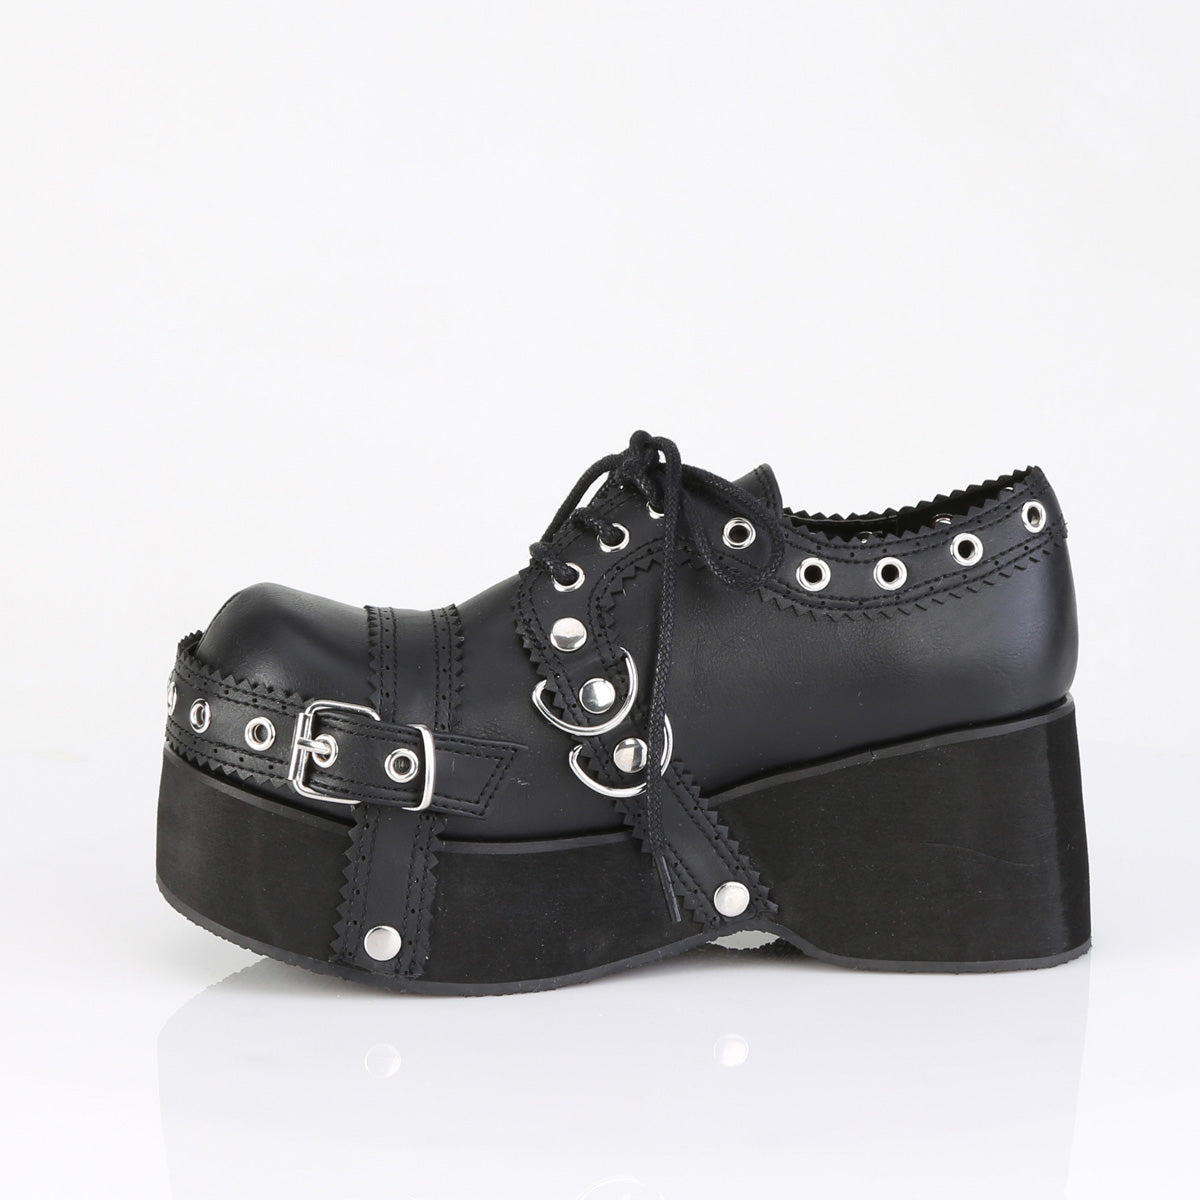 3 Inch Platform DANK-28 Black Vegan Leather